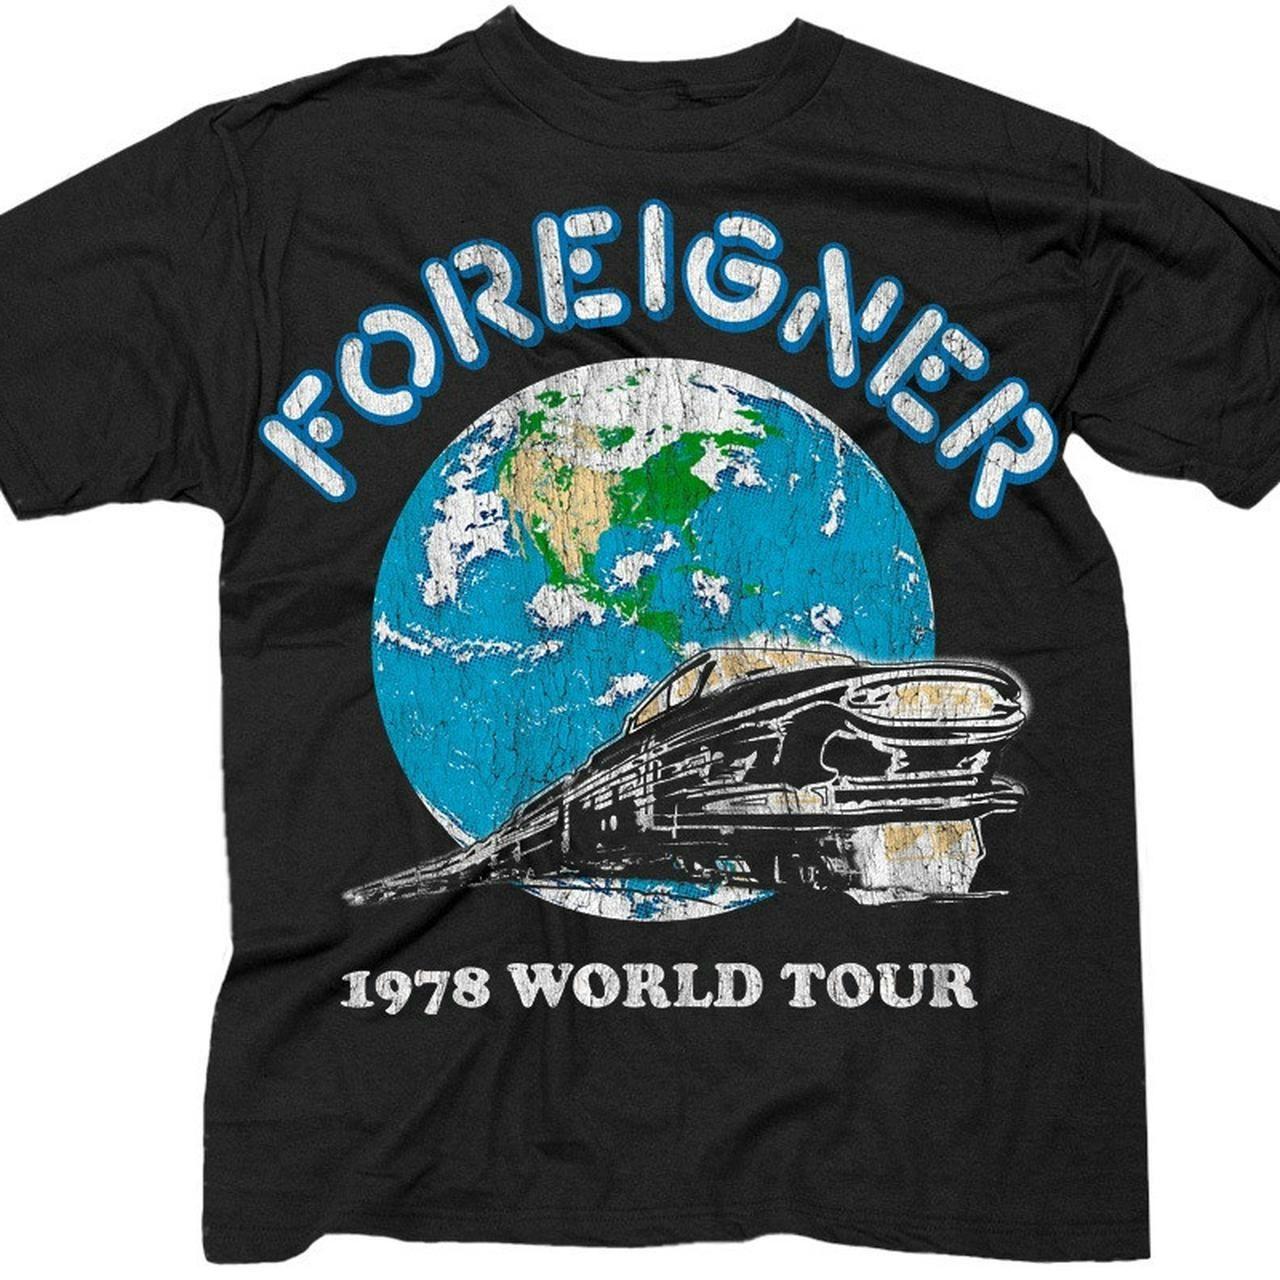 foreigner tour shirts